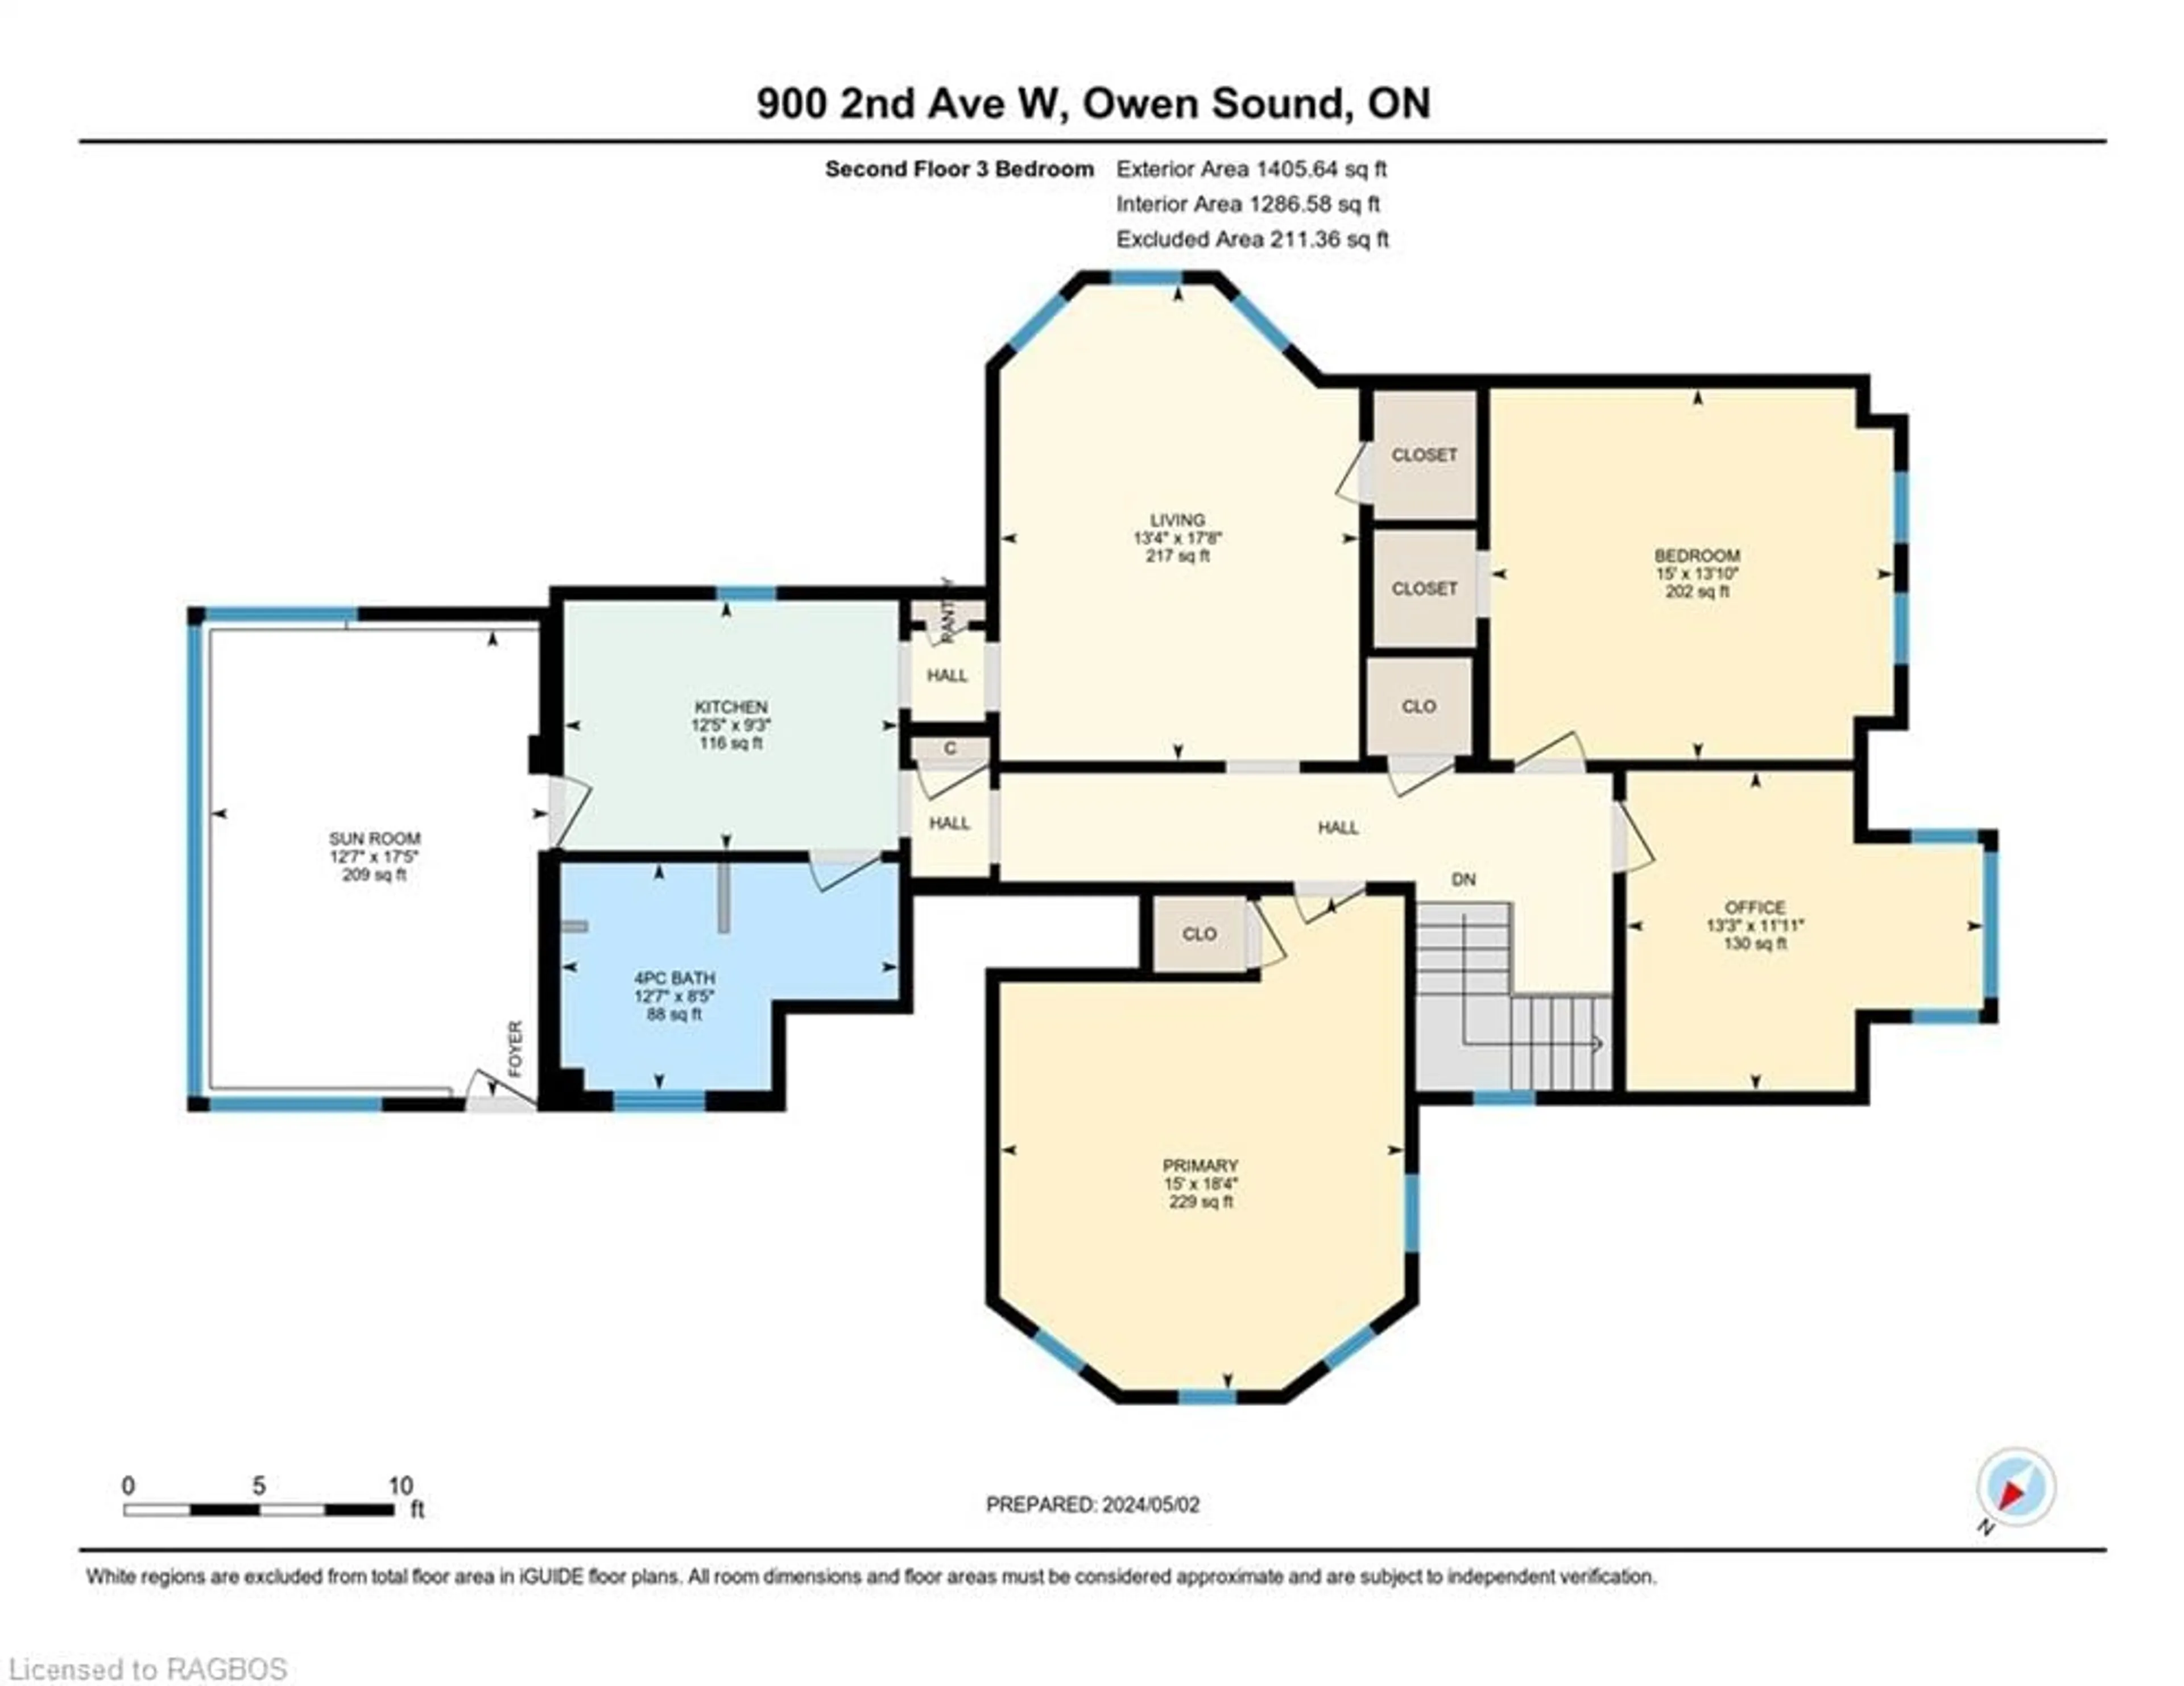 Floor plan for 900 2nd Ave, Owen Sound Ontario N4K 4M5